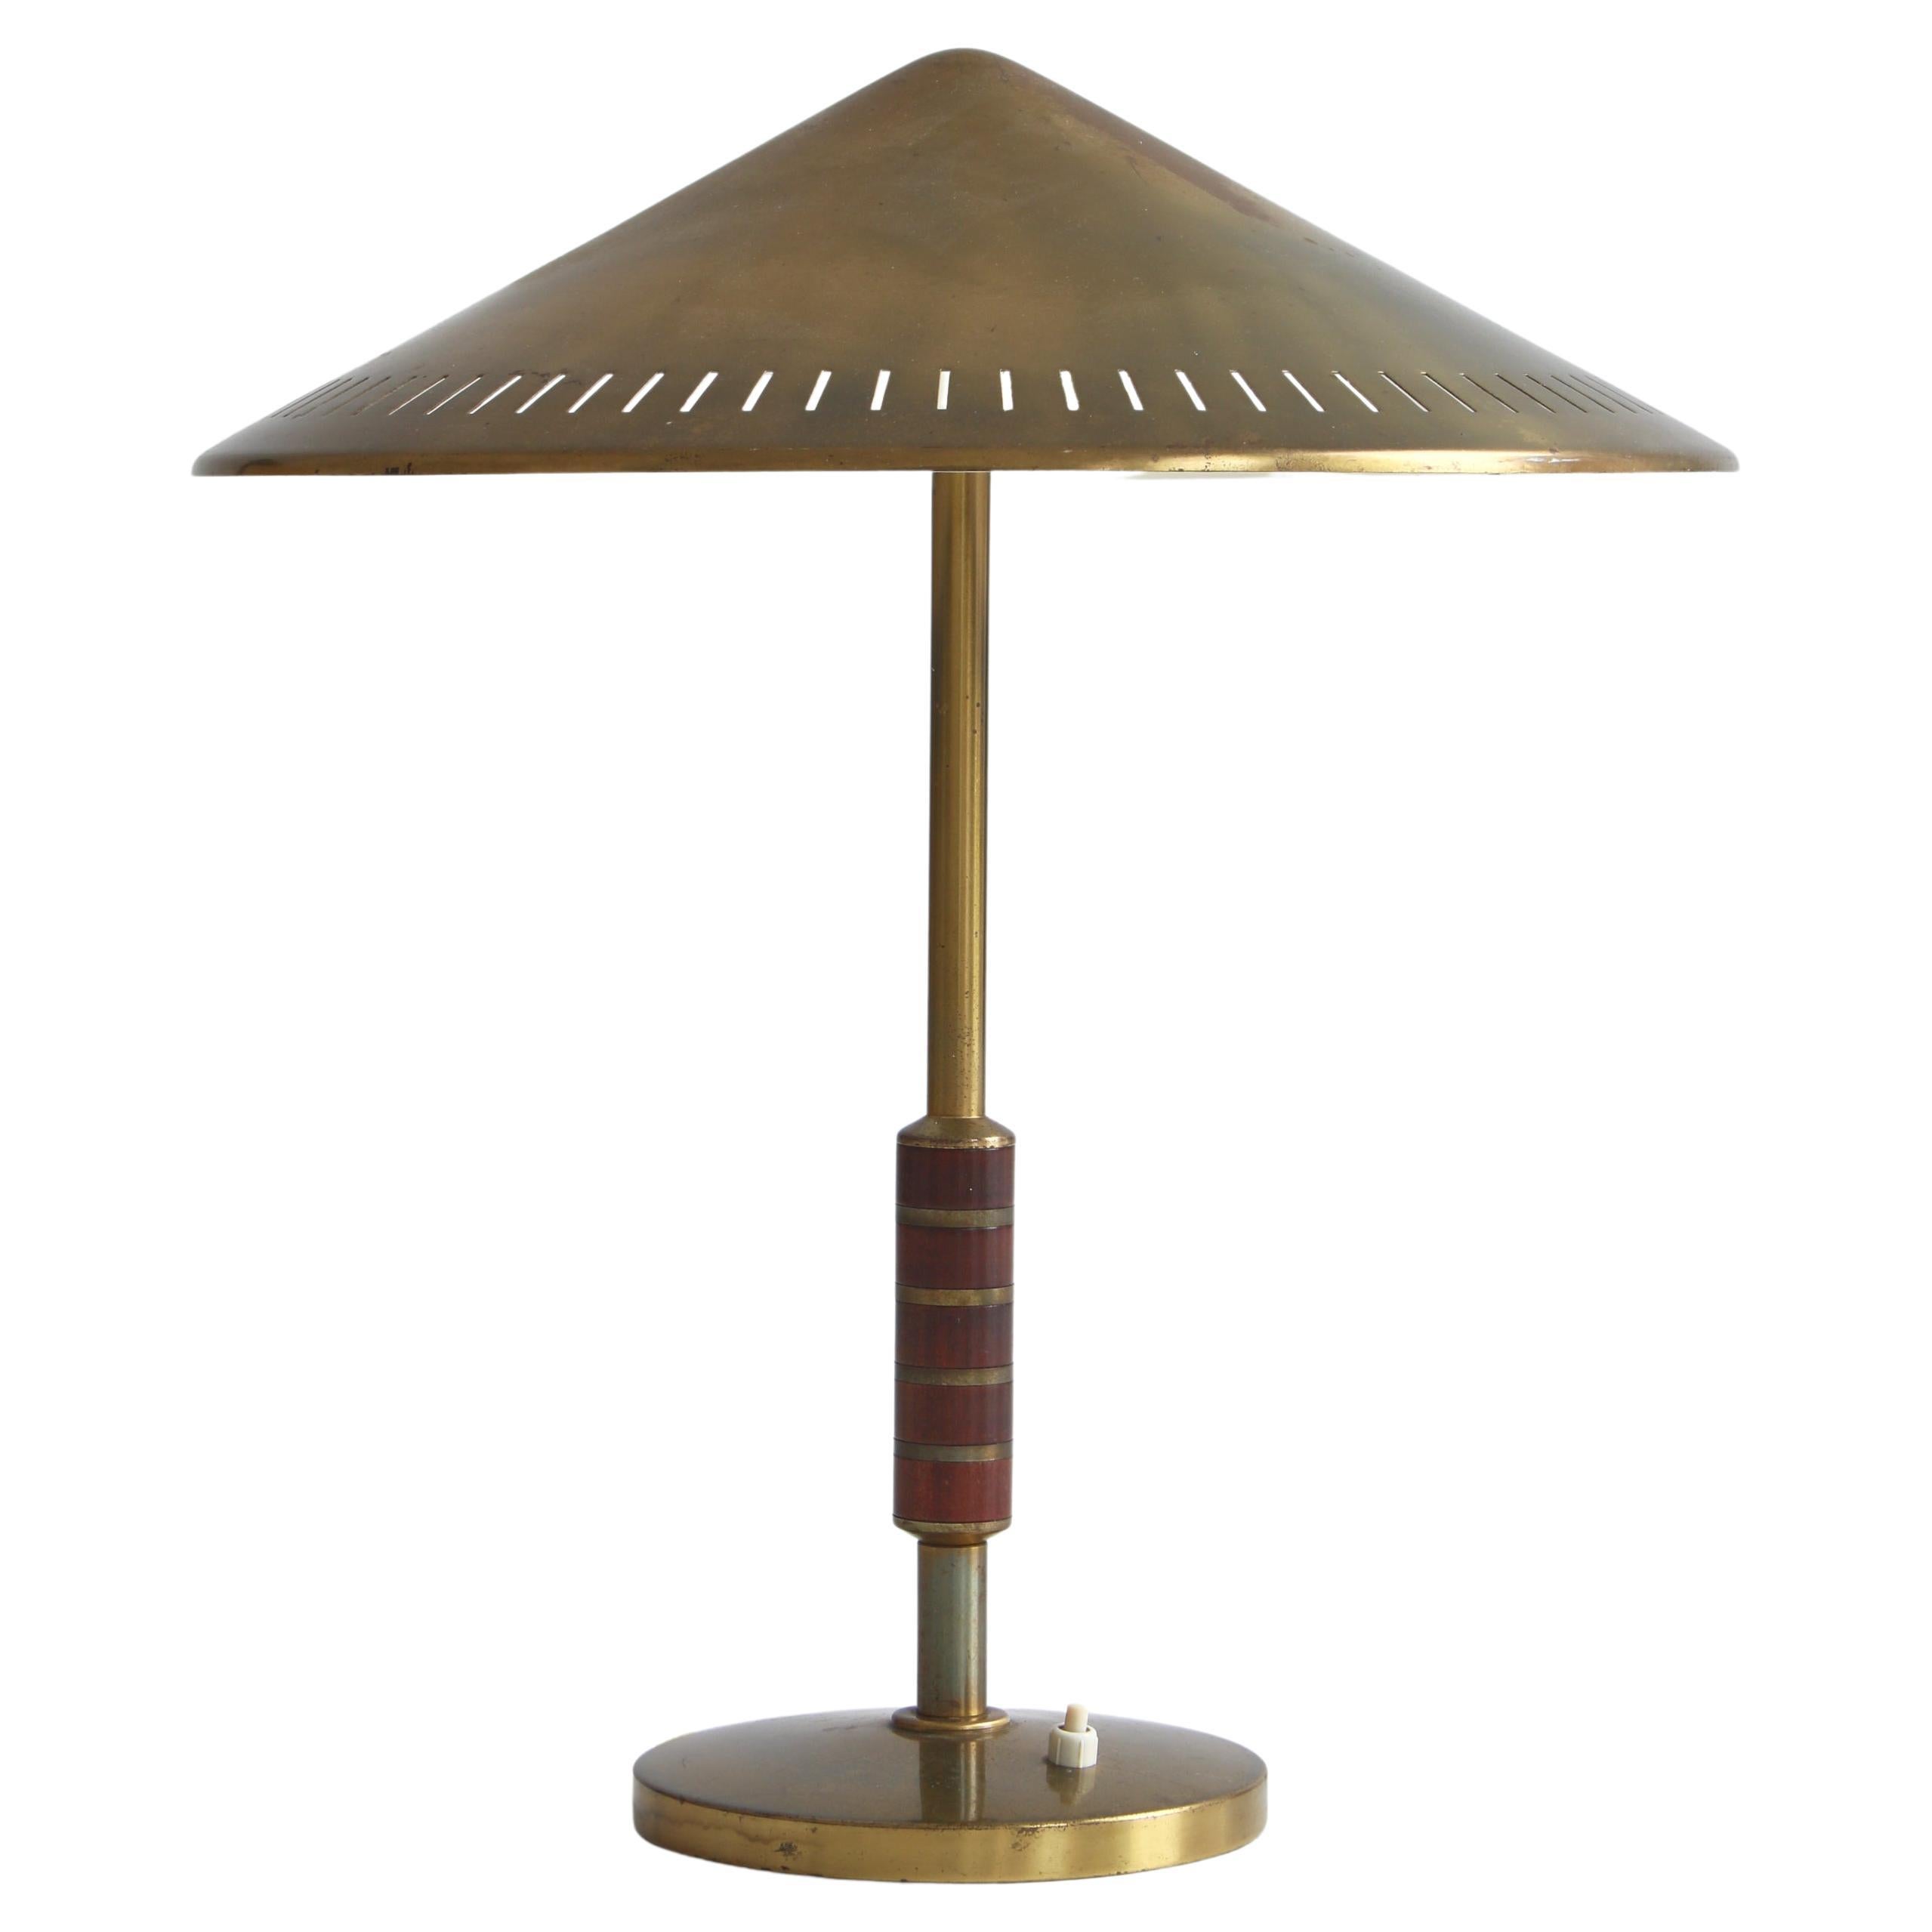 Danish Modern Brass & Mahogany Table Lamp by Bent Karlby for LYFA, 1956